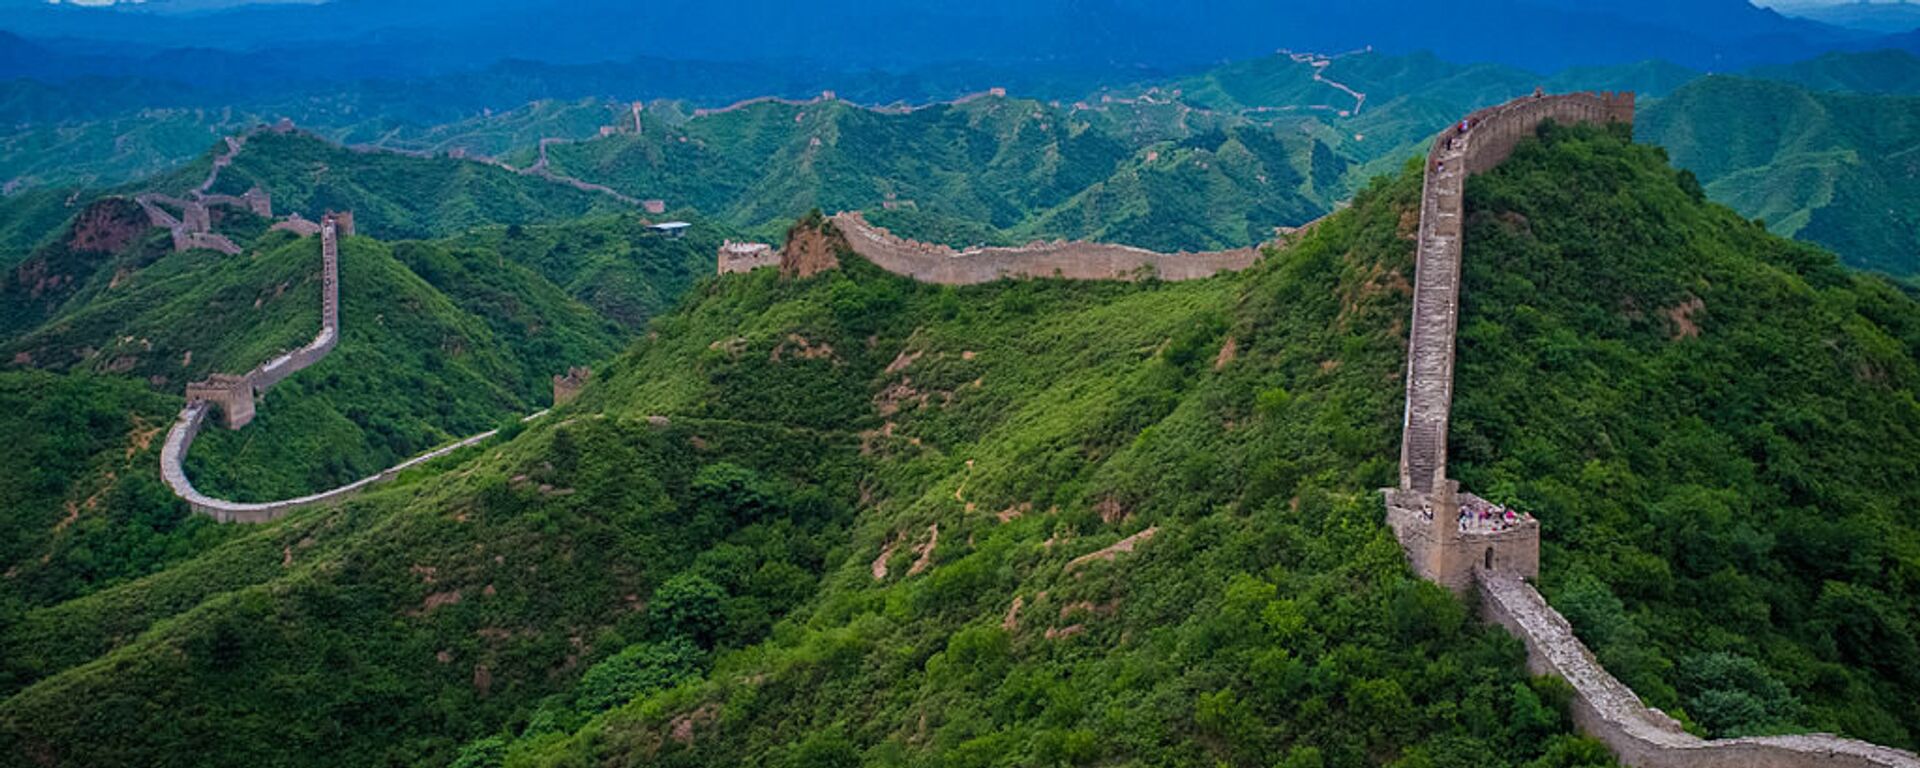 The Great Wall of China - Sputnik International, 1920, 22.10.2018